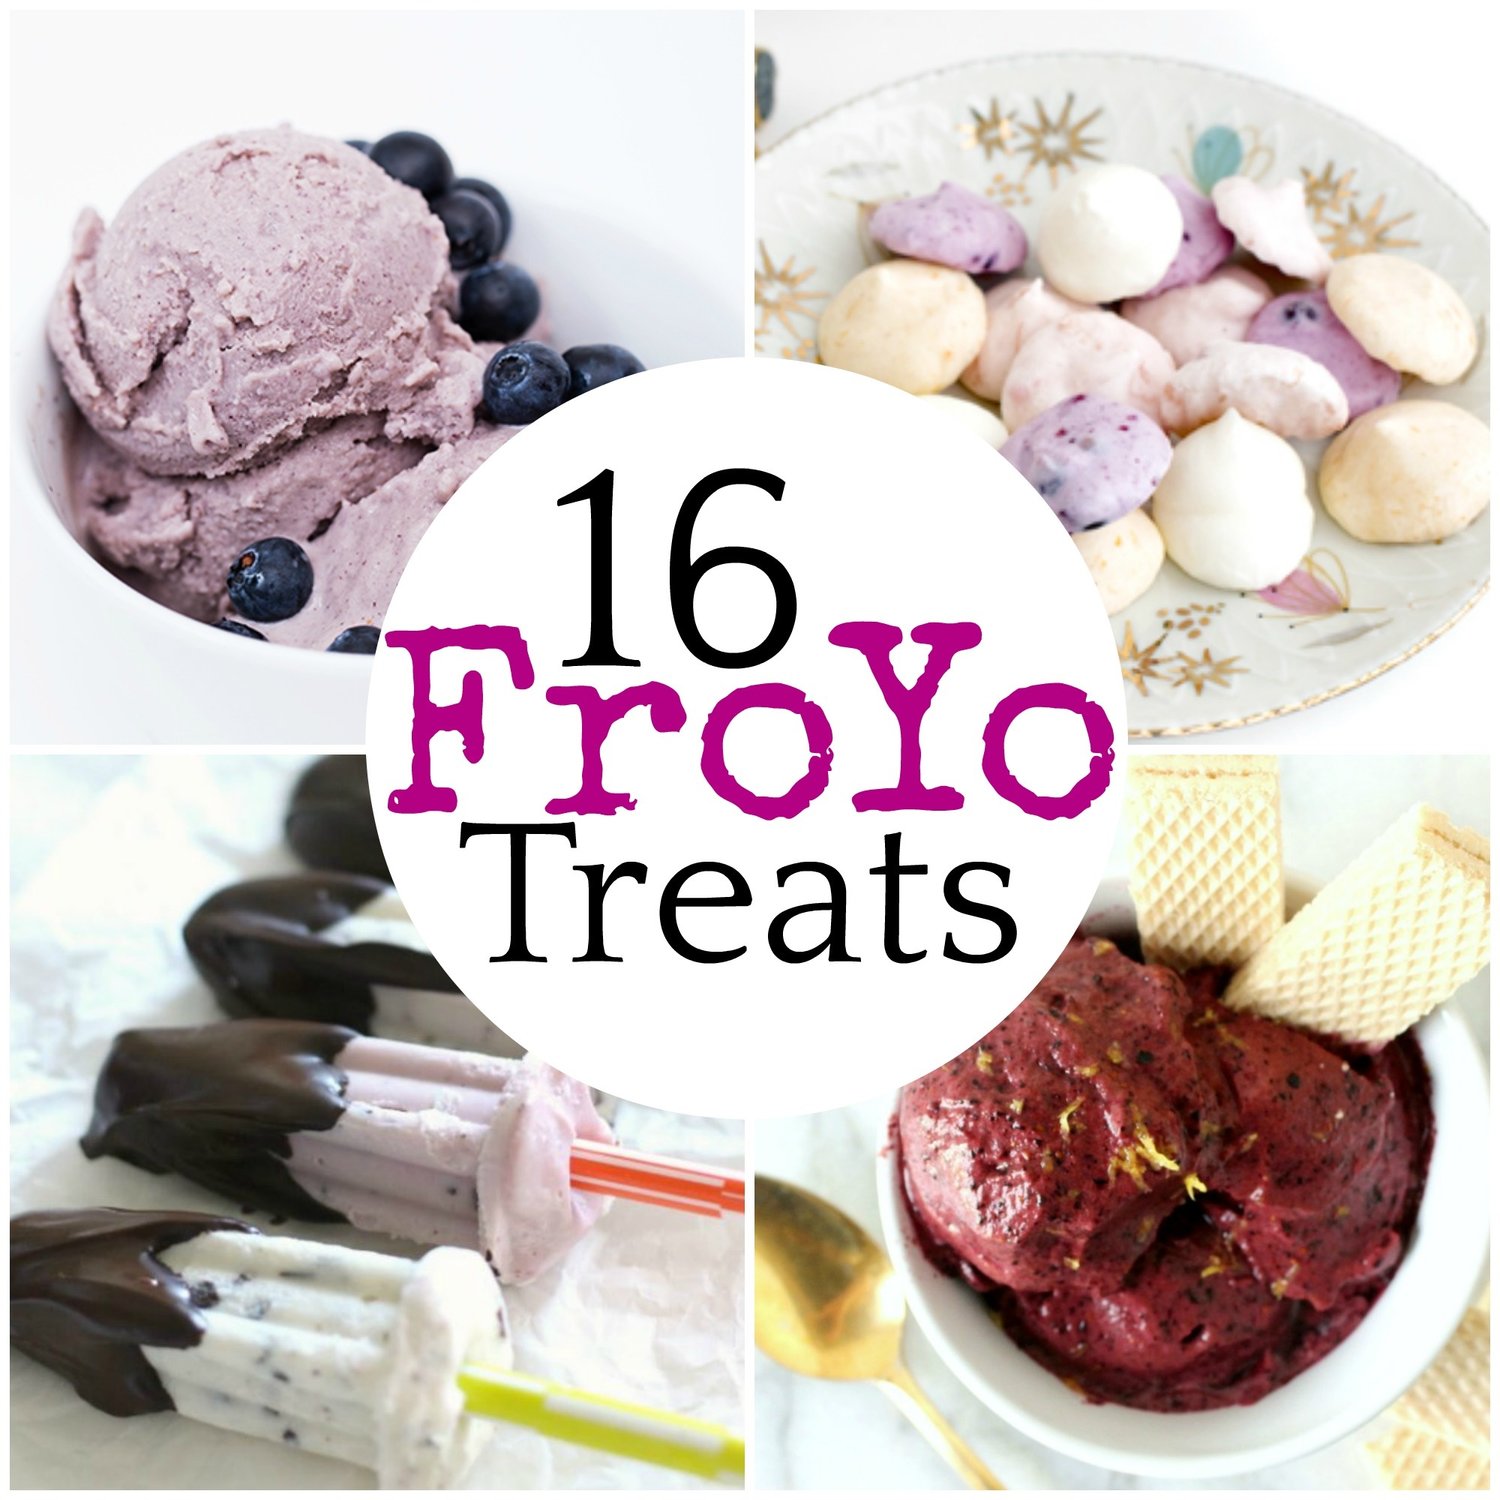 Frozen Yogurt - Froyo